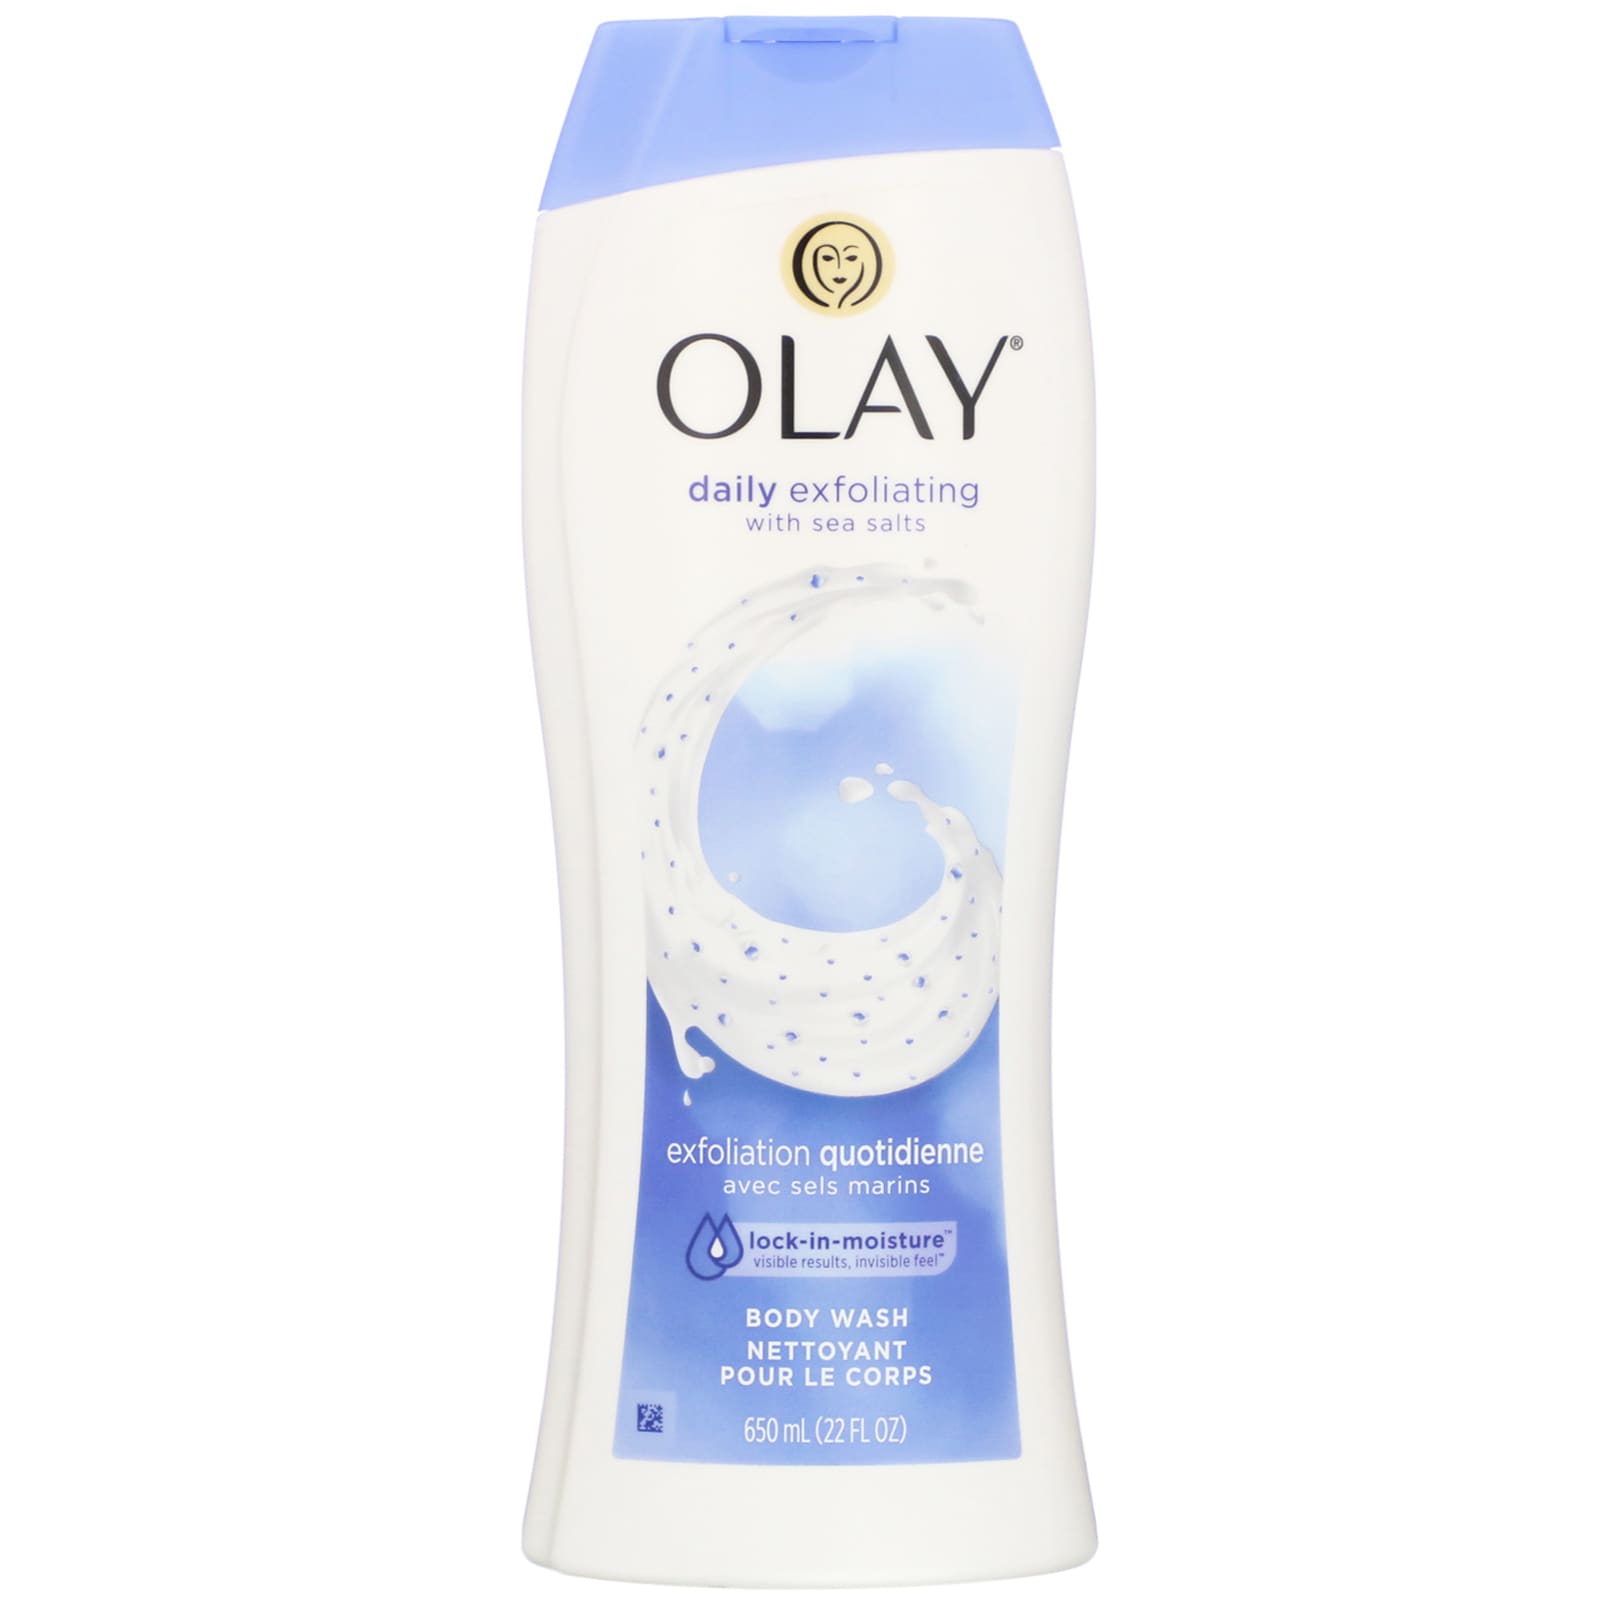 Olay, Daily Exfoliating Body Wash, with Sea Salts (650 ml)